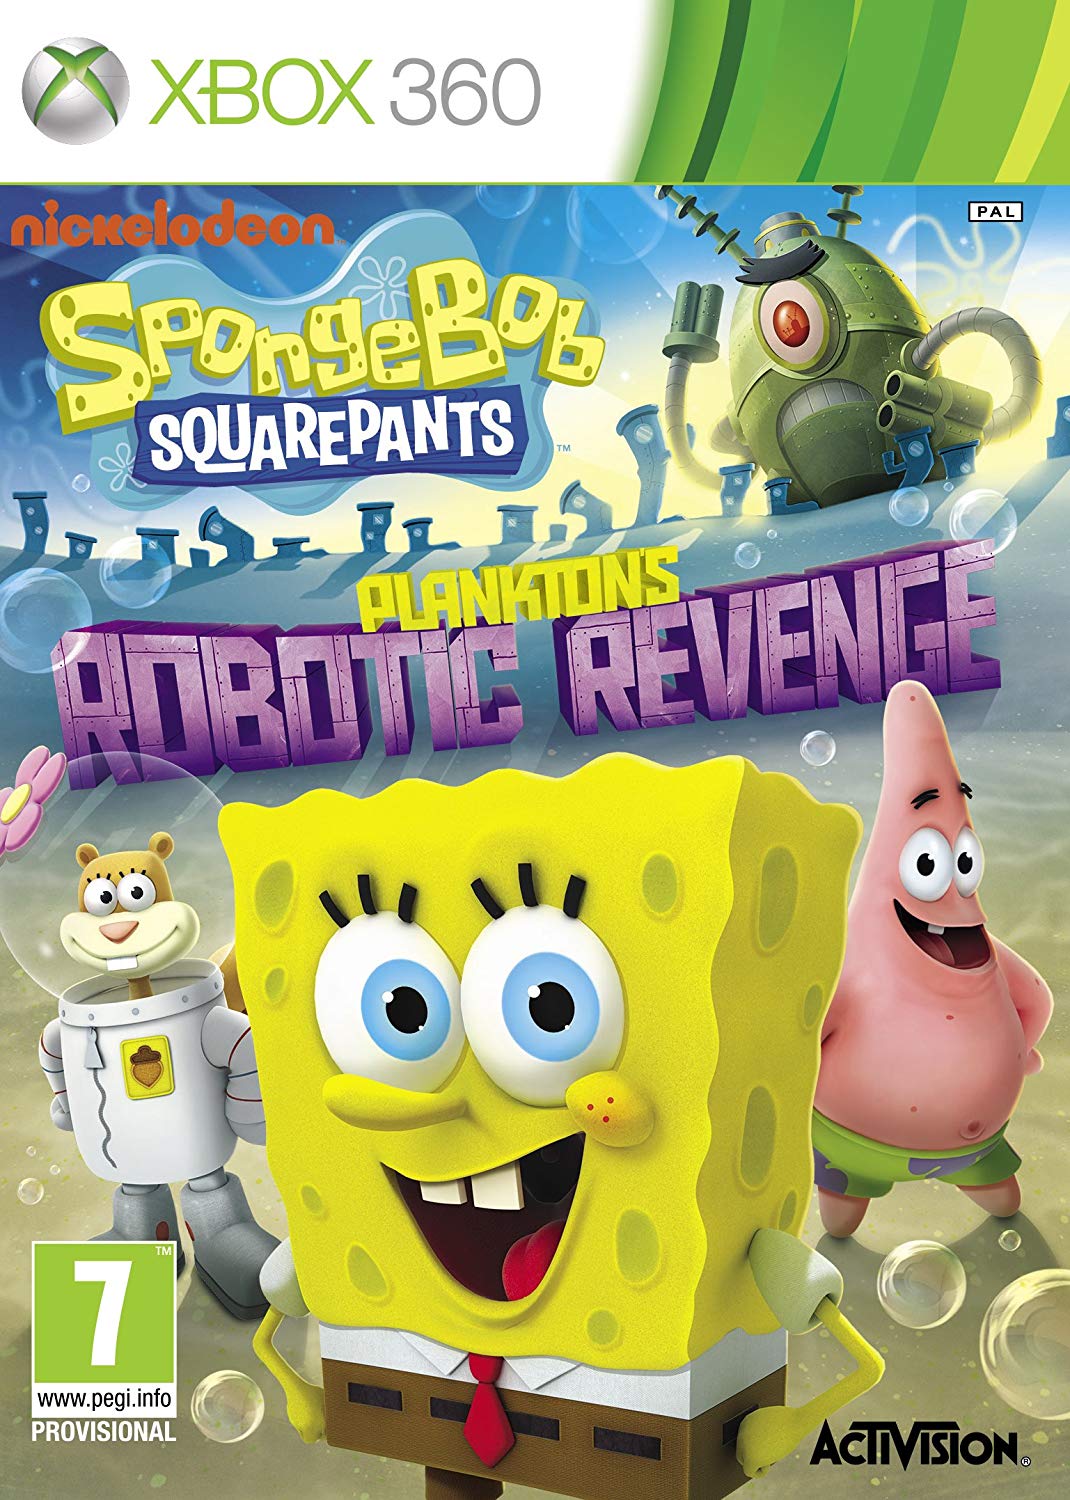 Nickelodeon Spongebob Squarepants Planktons Robotic Revenge